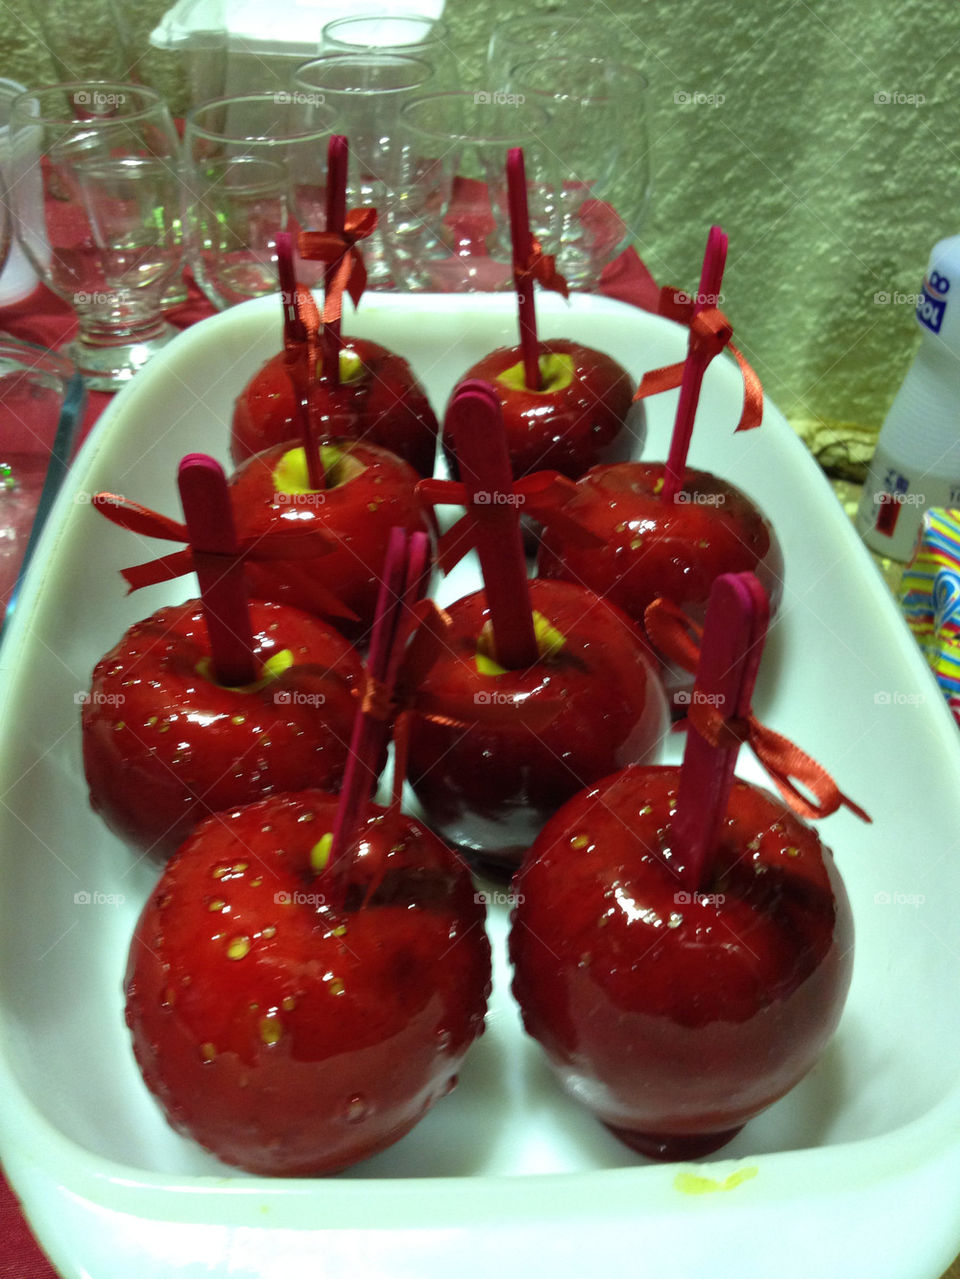 red apple saudi arabia amor by daniel_leroy